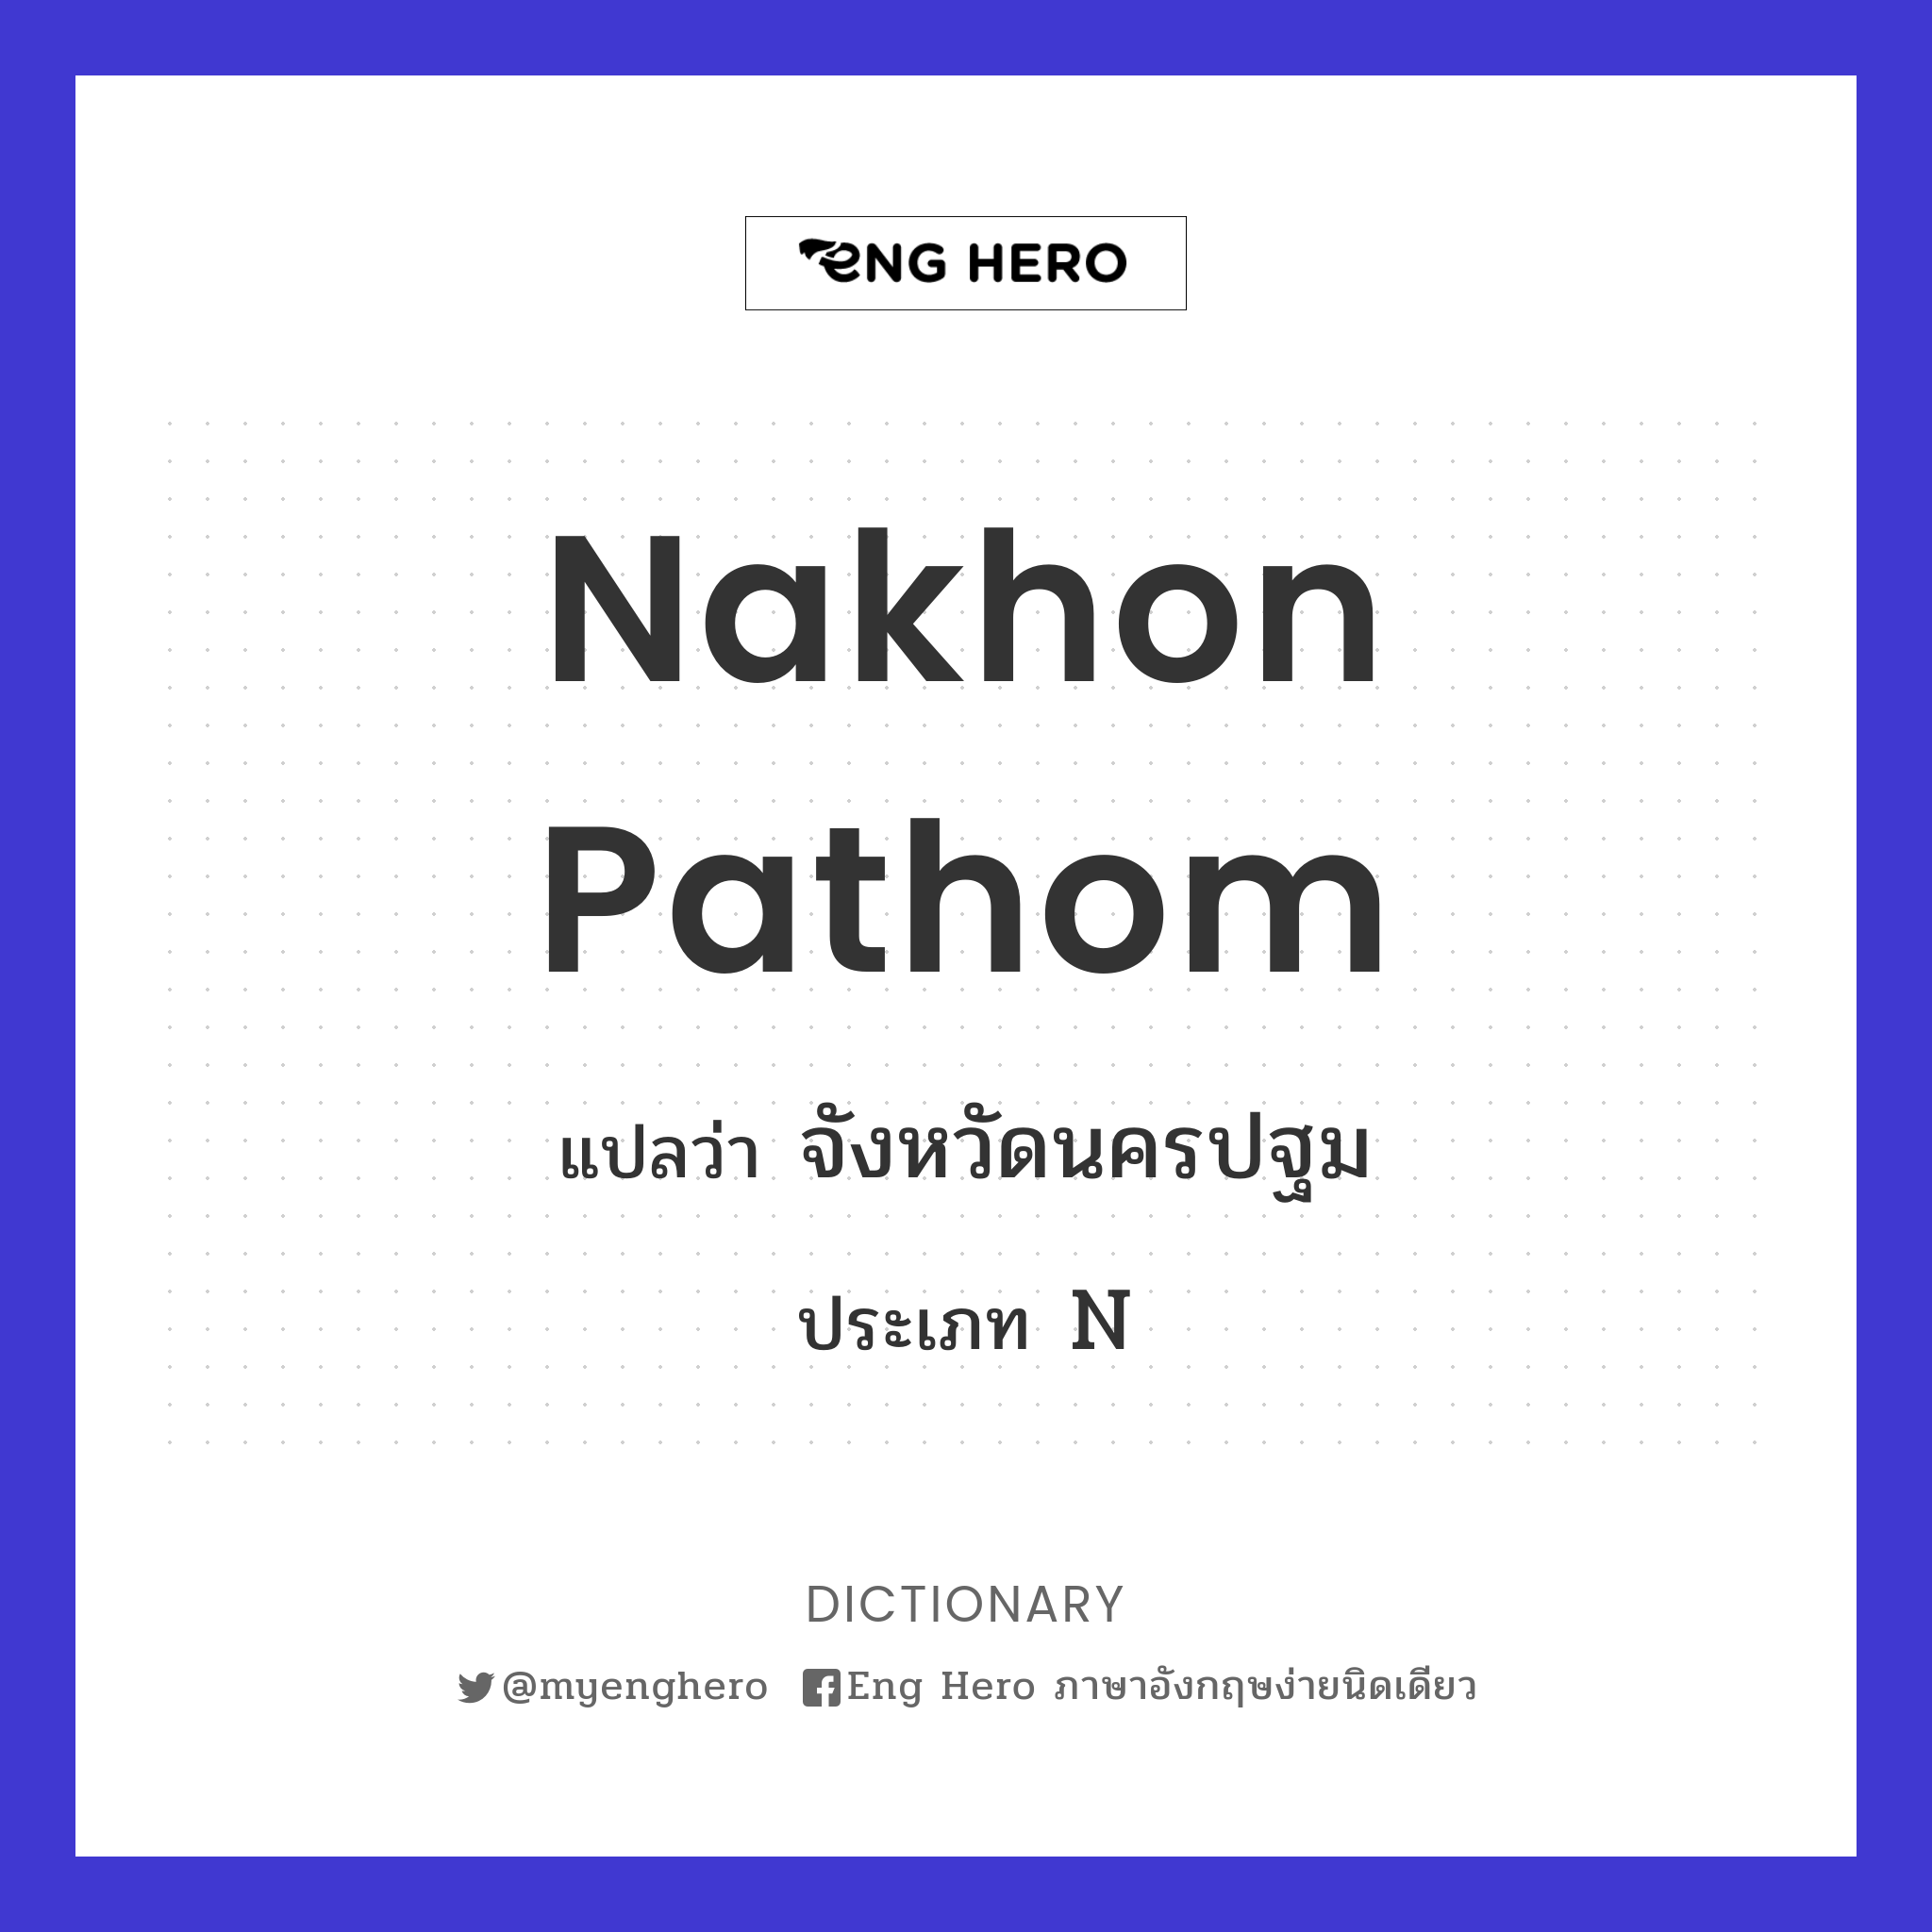 Nakhon Pathom